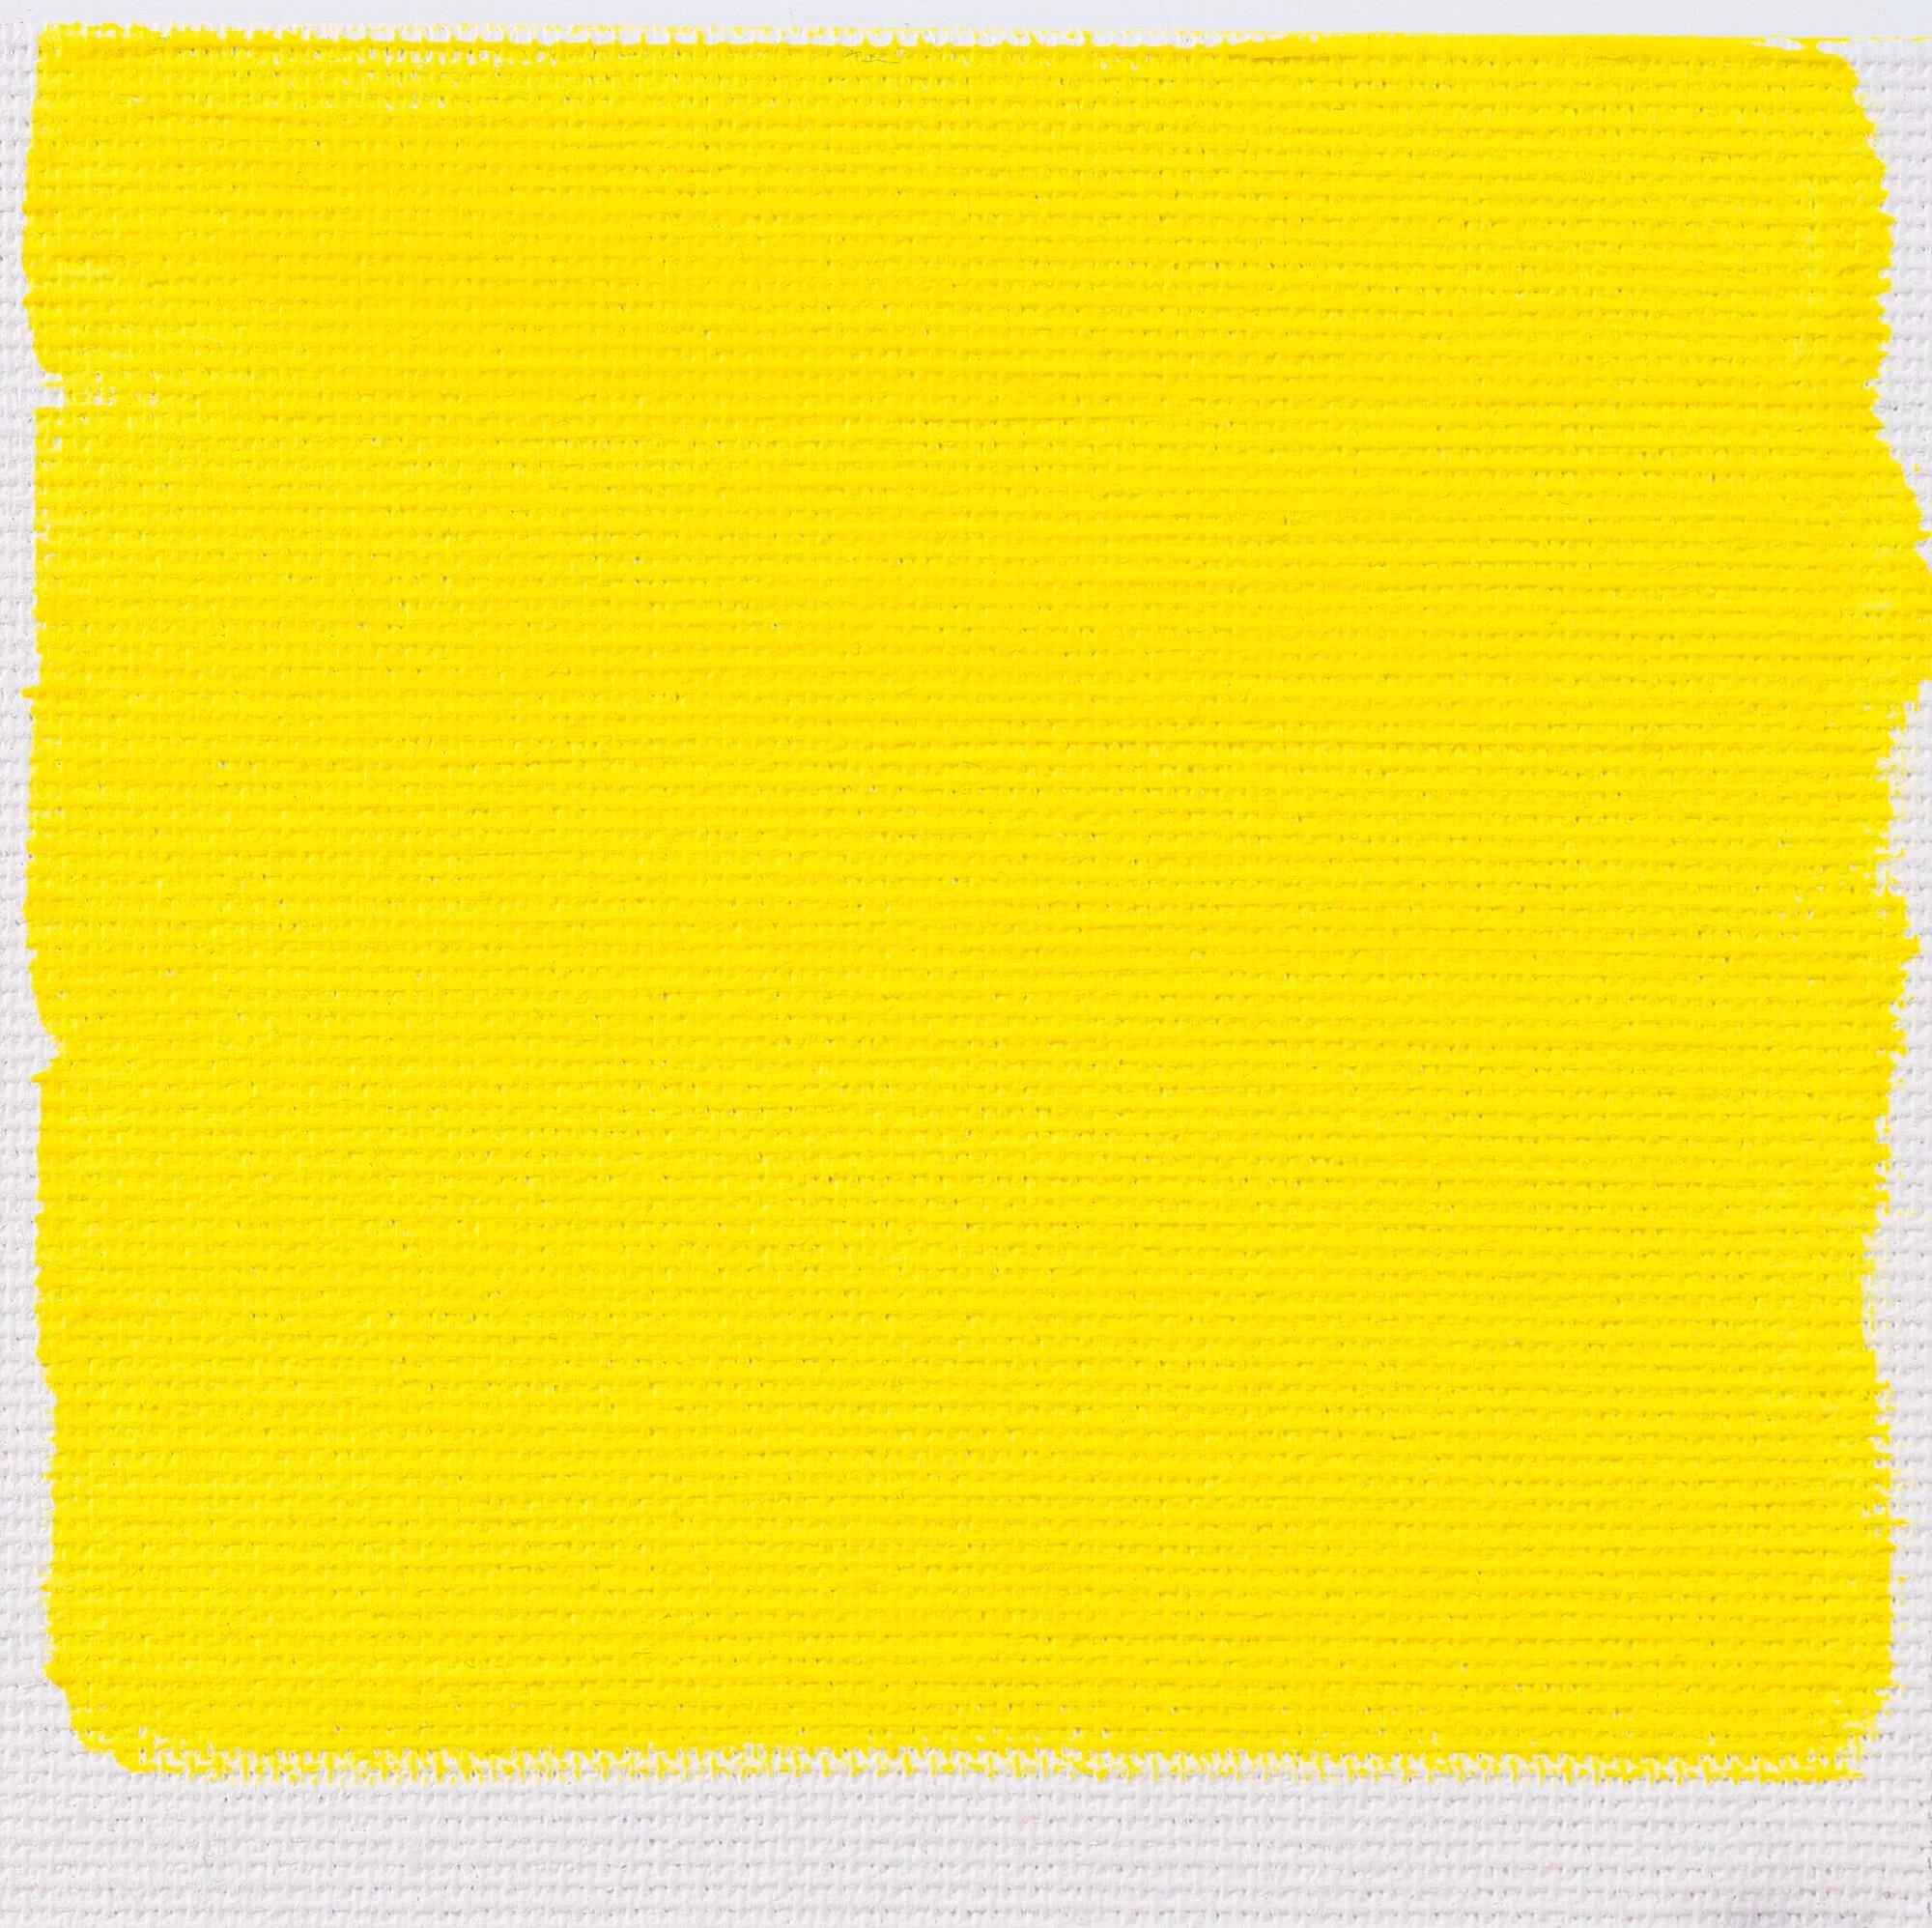 Azo Yellow Lemon (Primary)